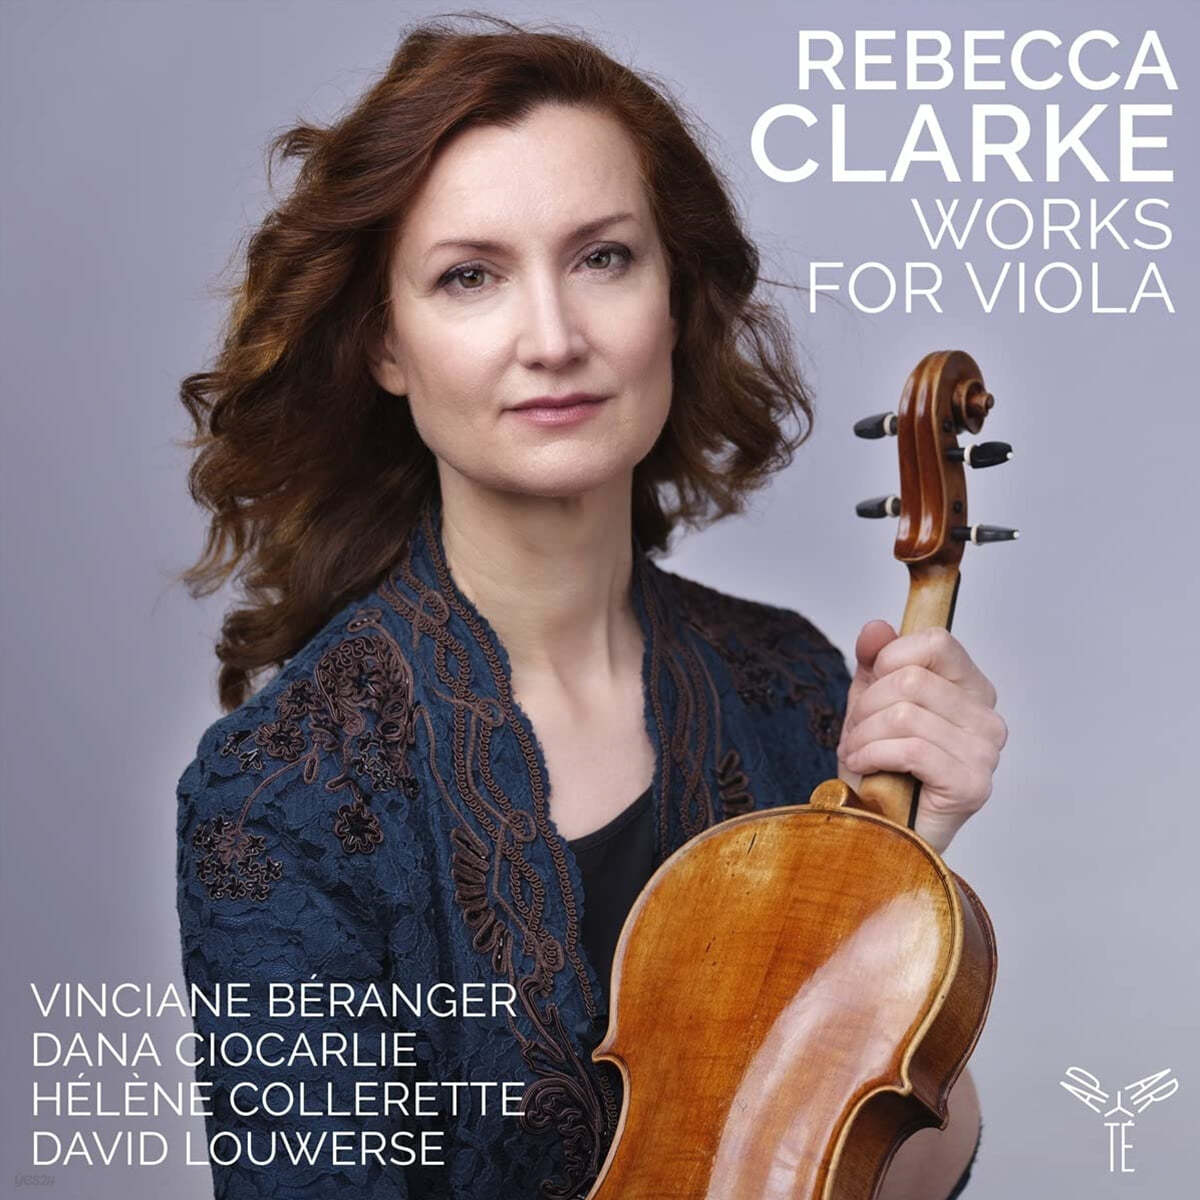 Vinciane Beranger 레베카 클라크: 비올라를 위한 작품 (Rebecca Clarke: Works for Viola) 